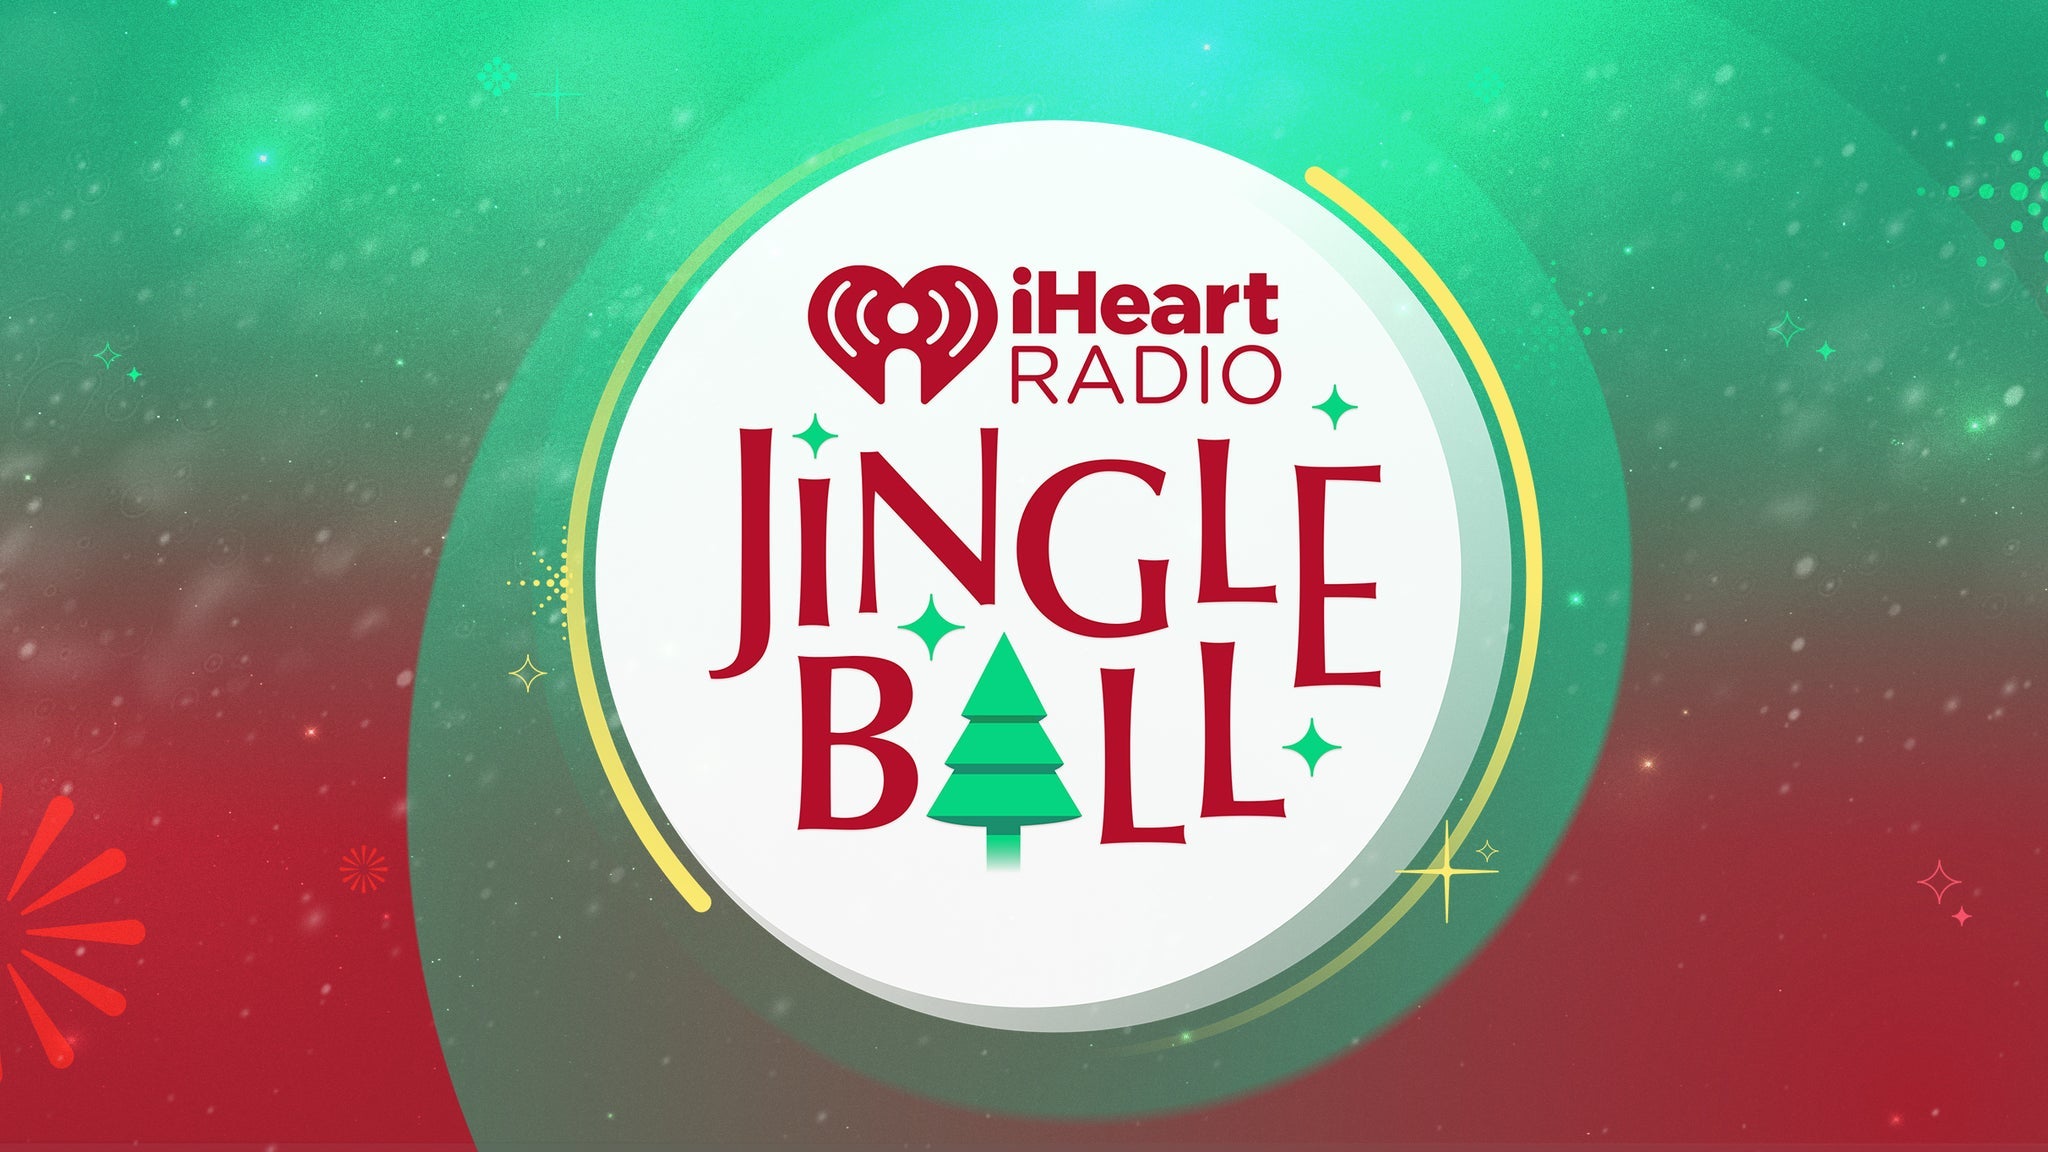 102.7 KIIS FM's Jingle Ball Presented by Capital One